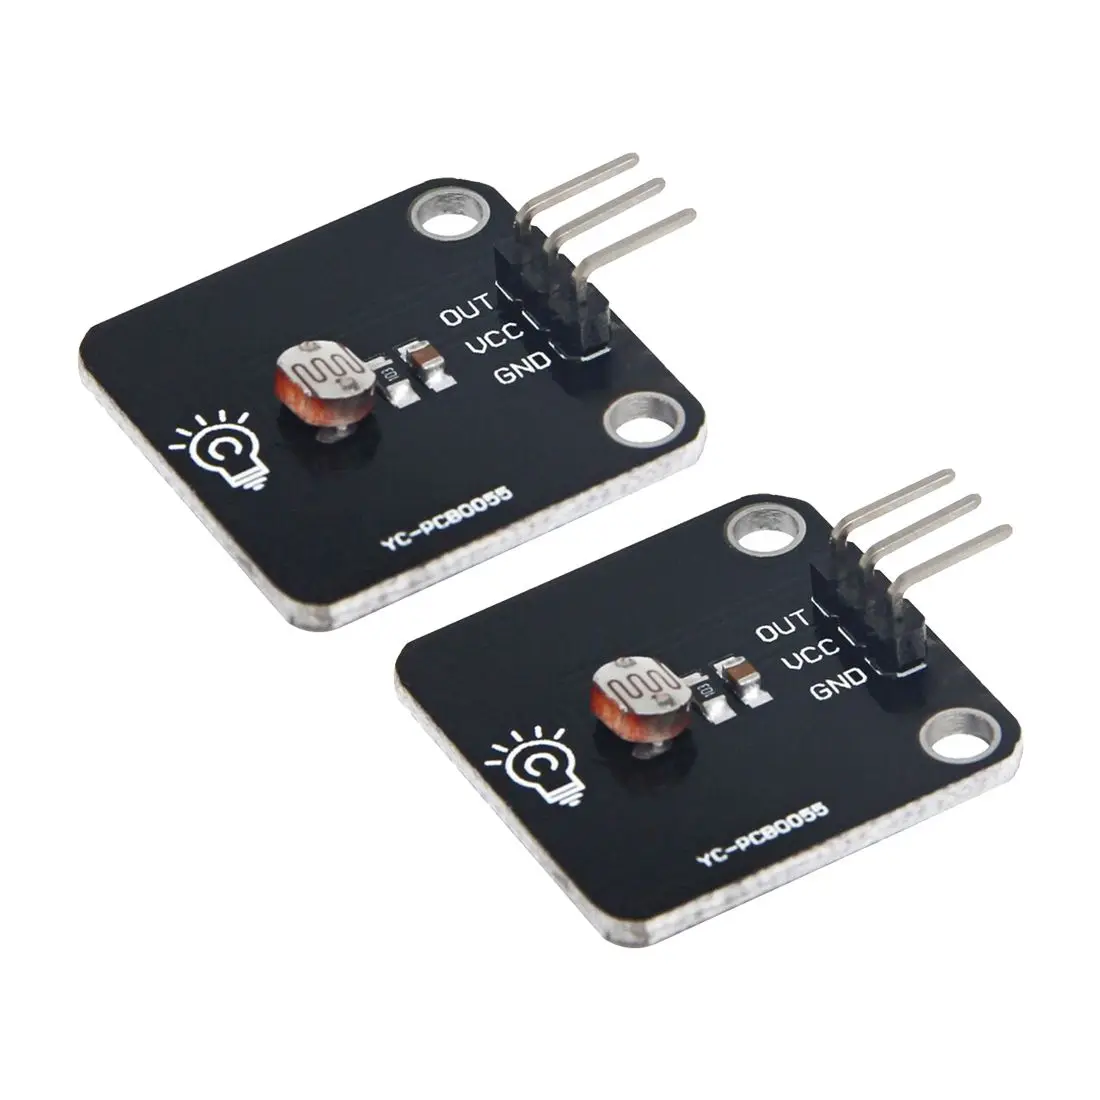 2x DIY 3,3-5 V модуль датчика яркости для Arduino металл/пластик-черный